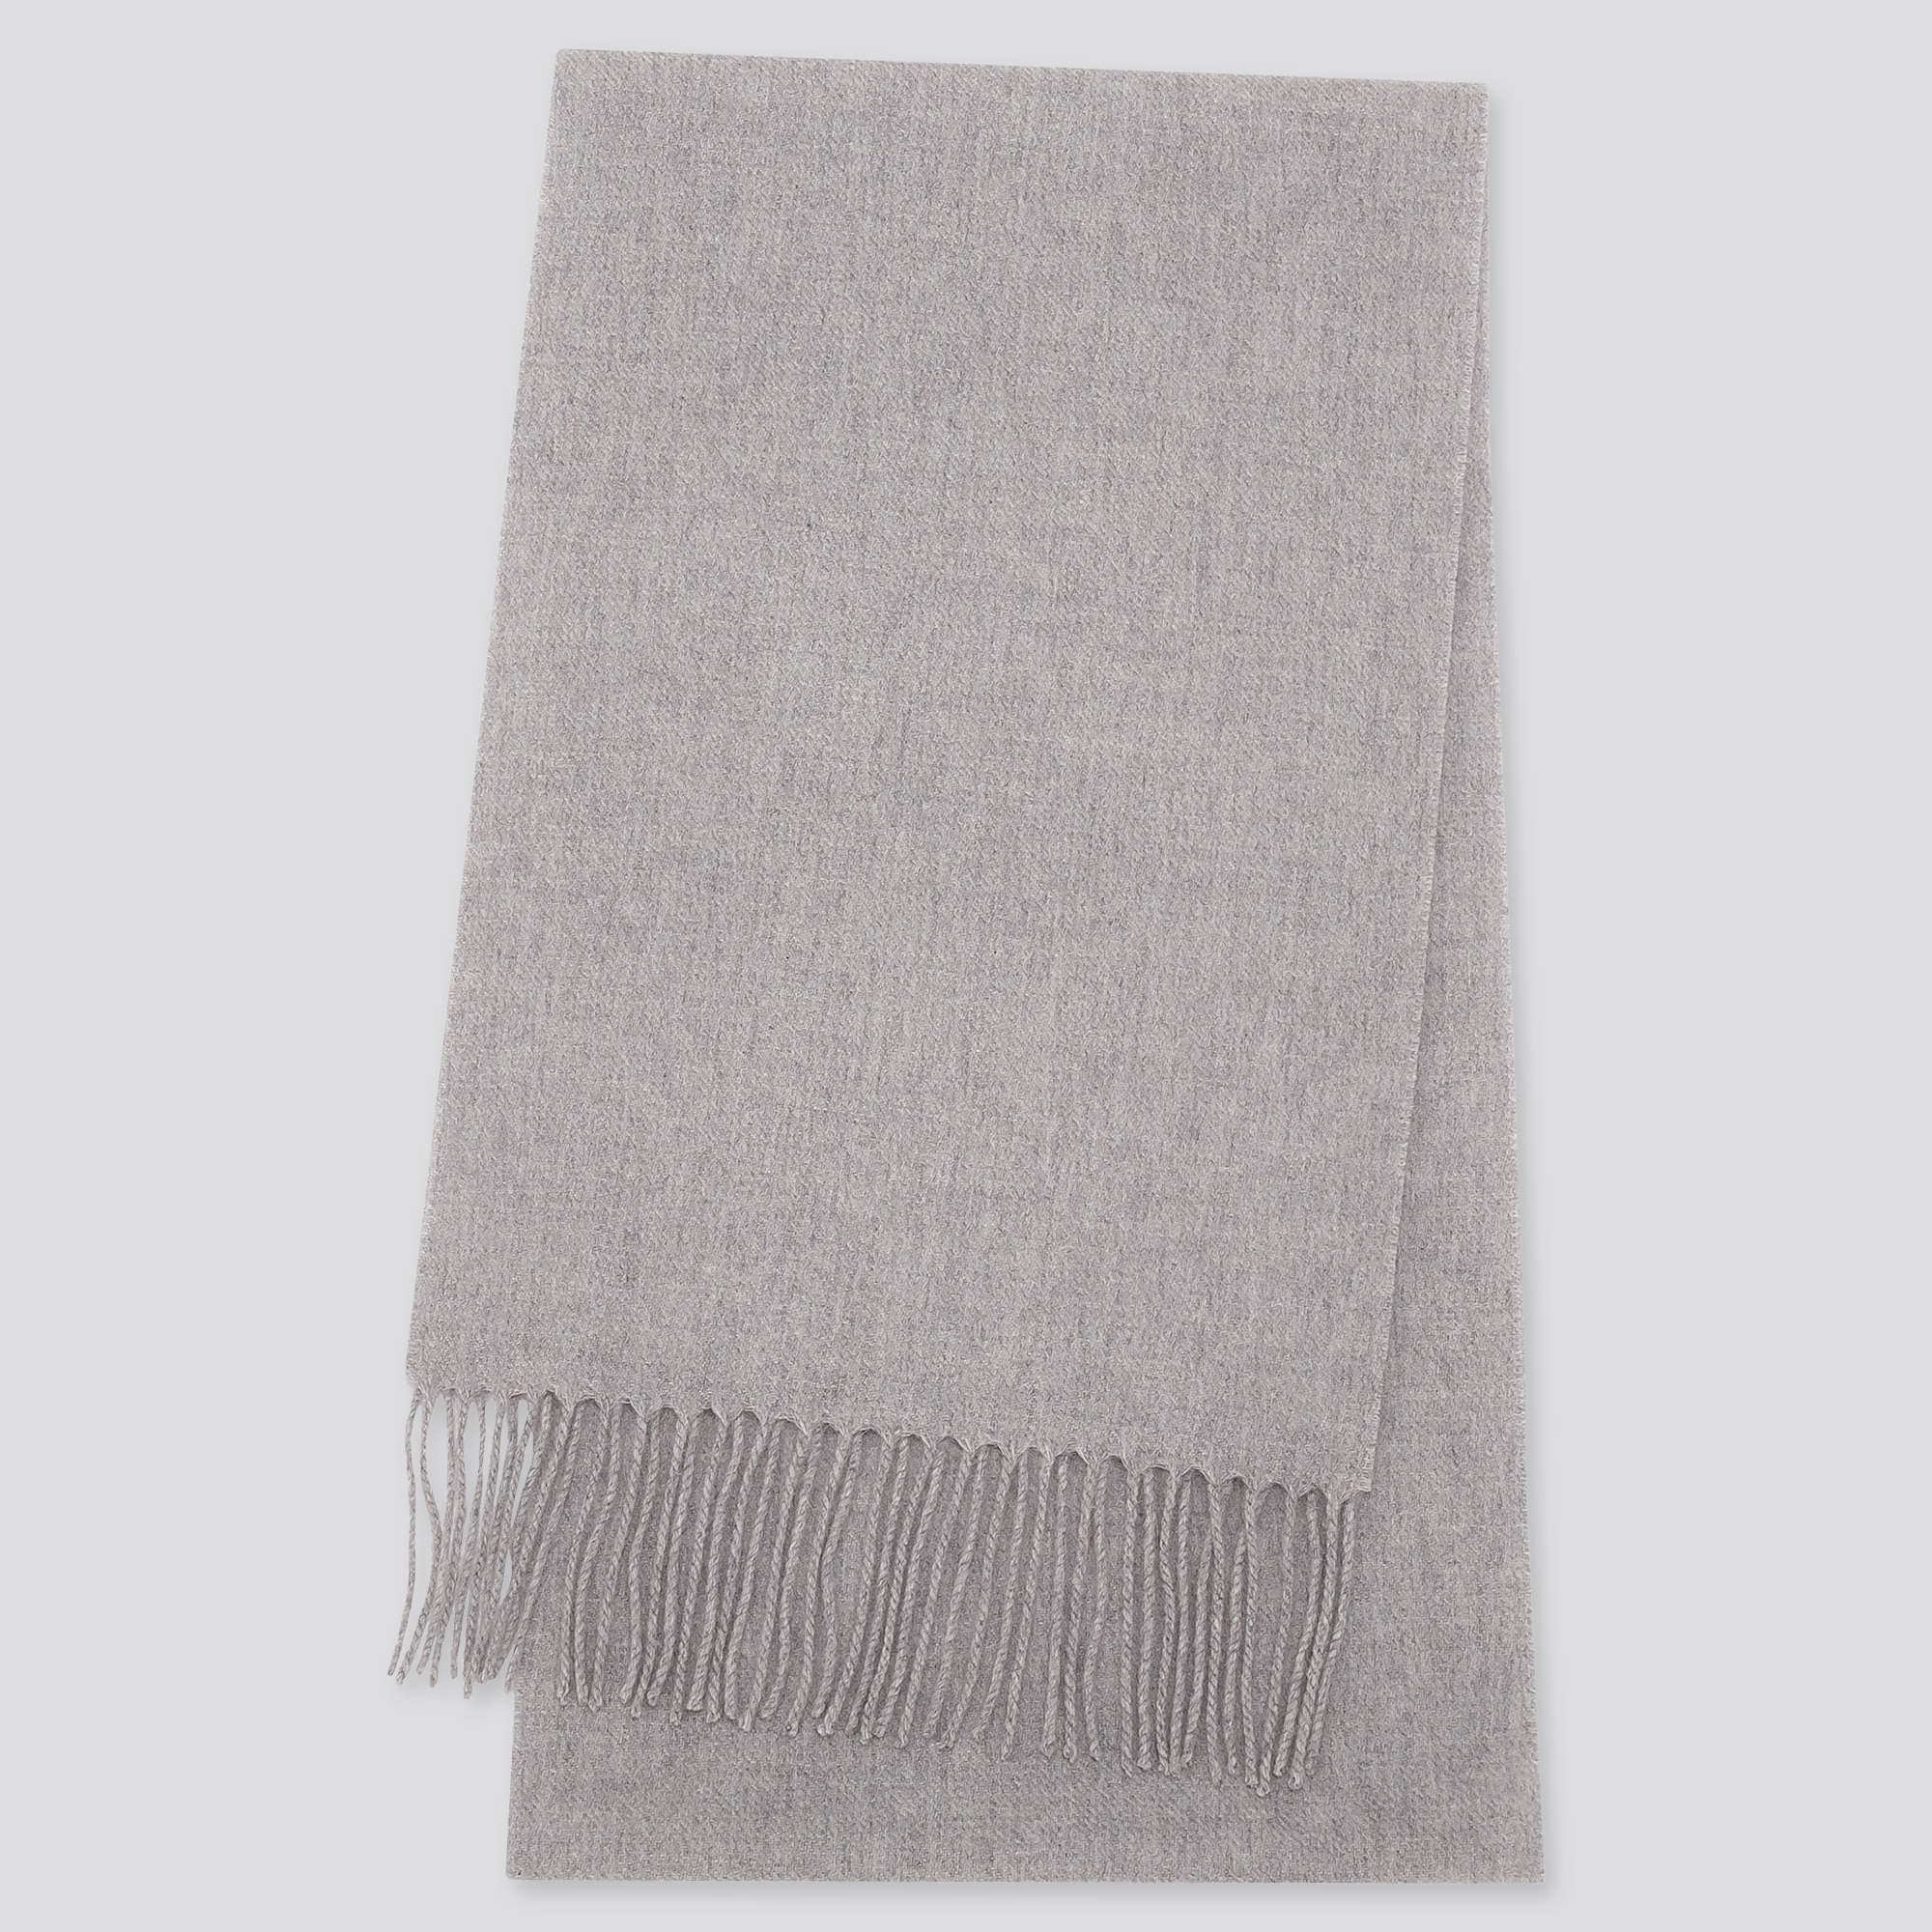 washable cashmere scarf